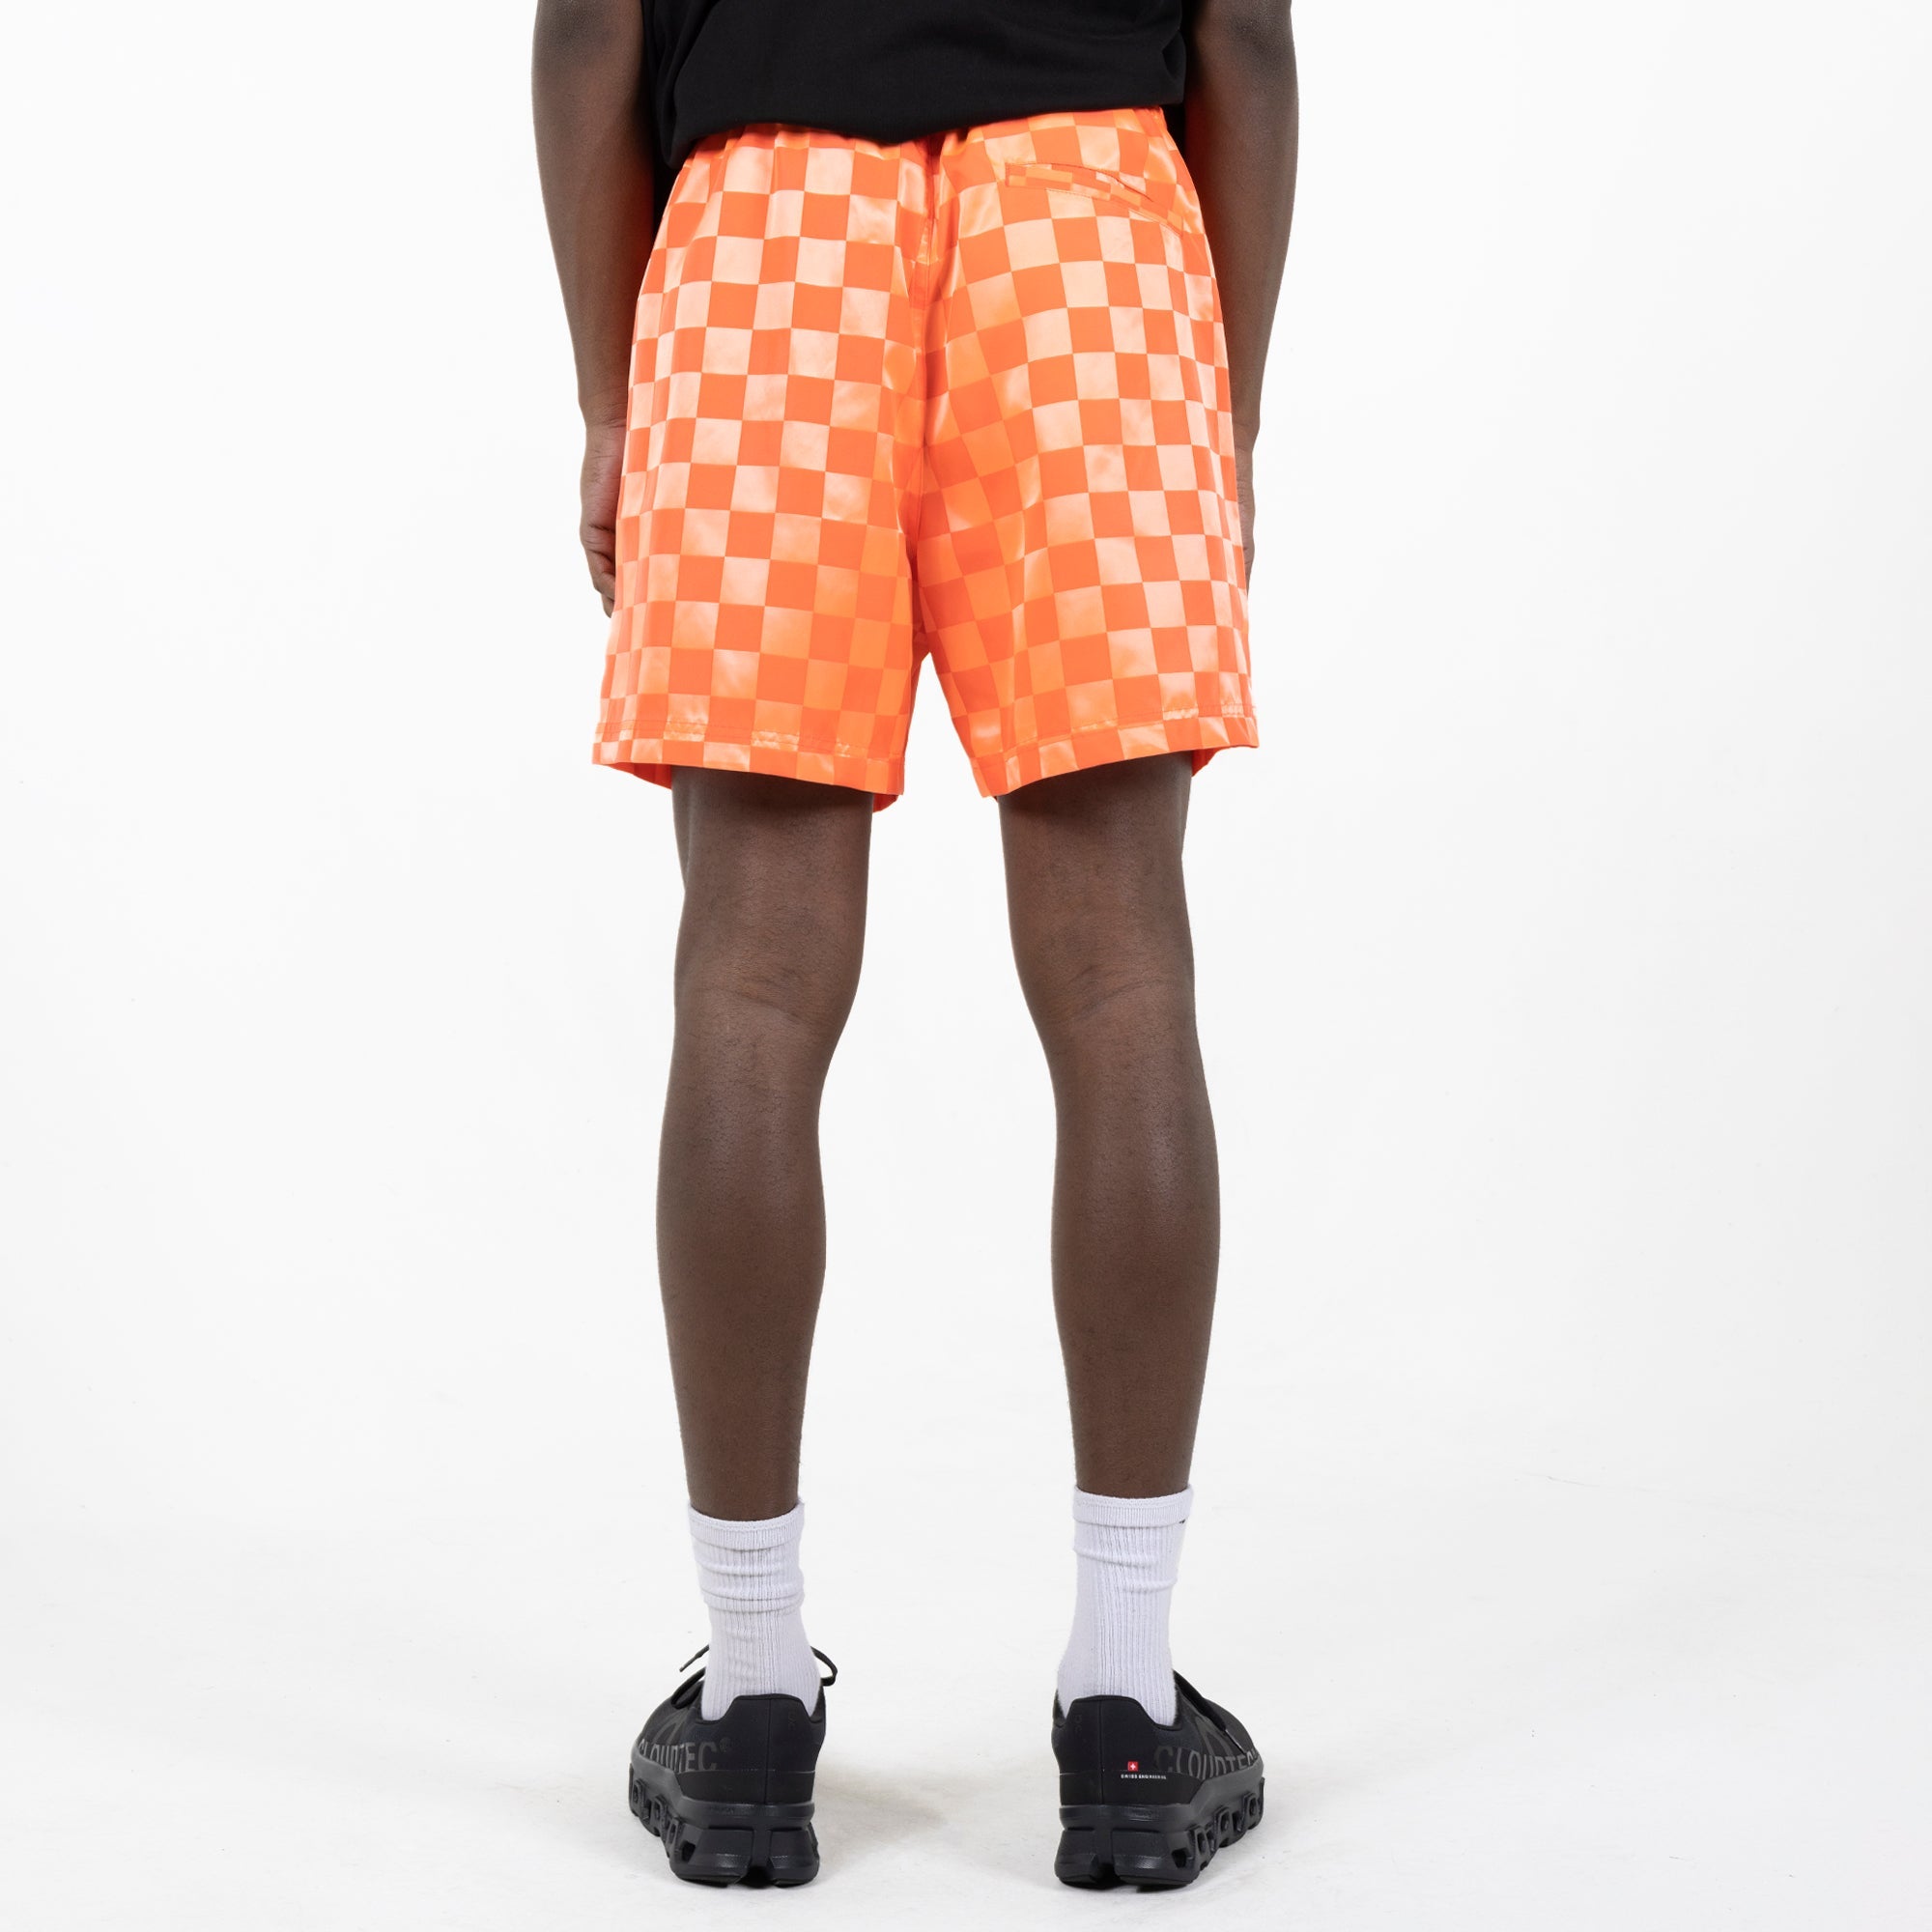 Louis Vuitton x NBA Basketball Shorts Beige (FW21)